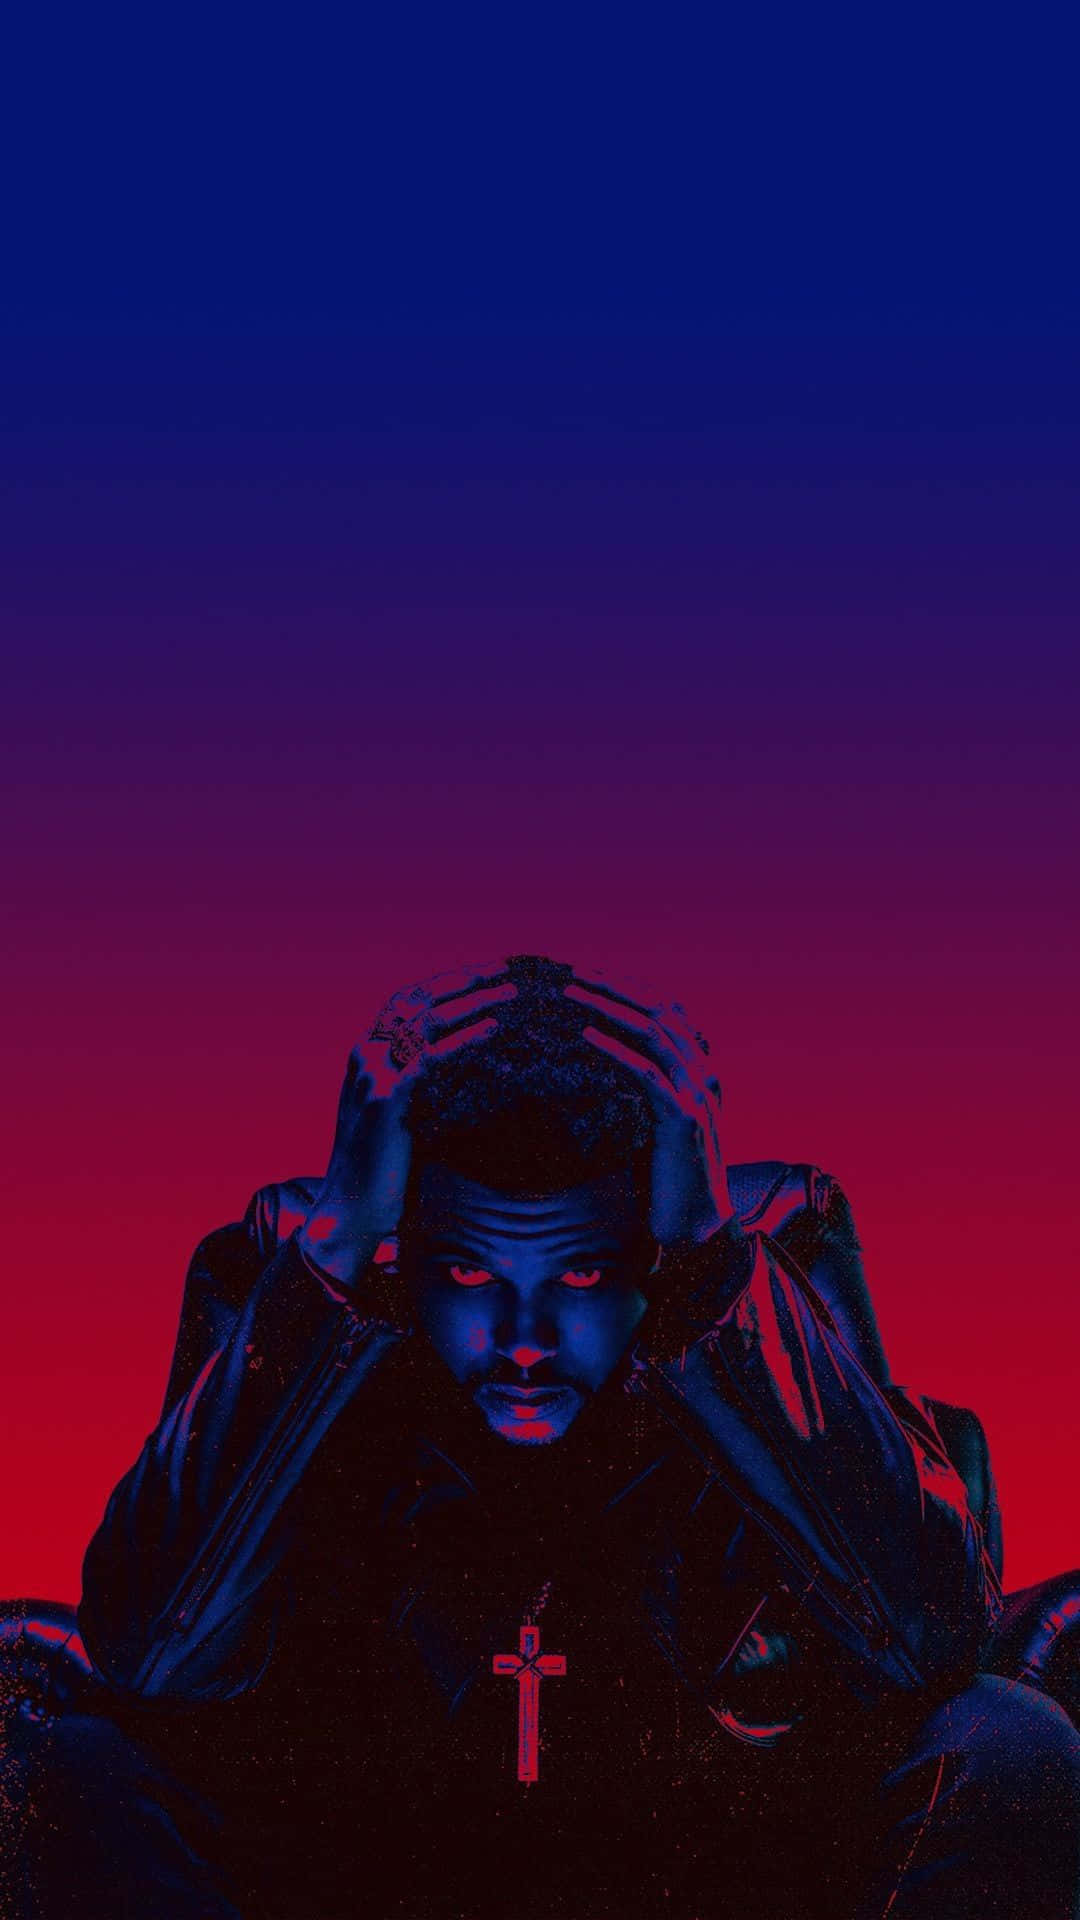 Download Cool Rapper The Weeknd Wallpaper 